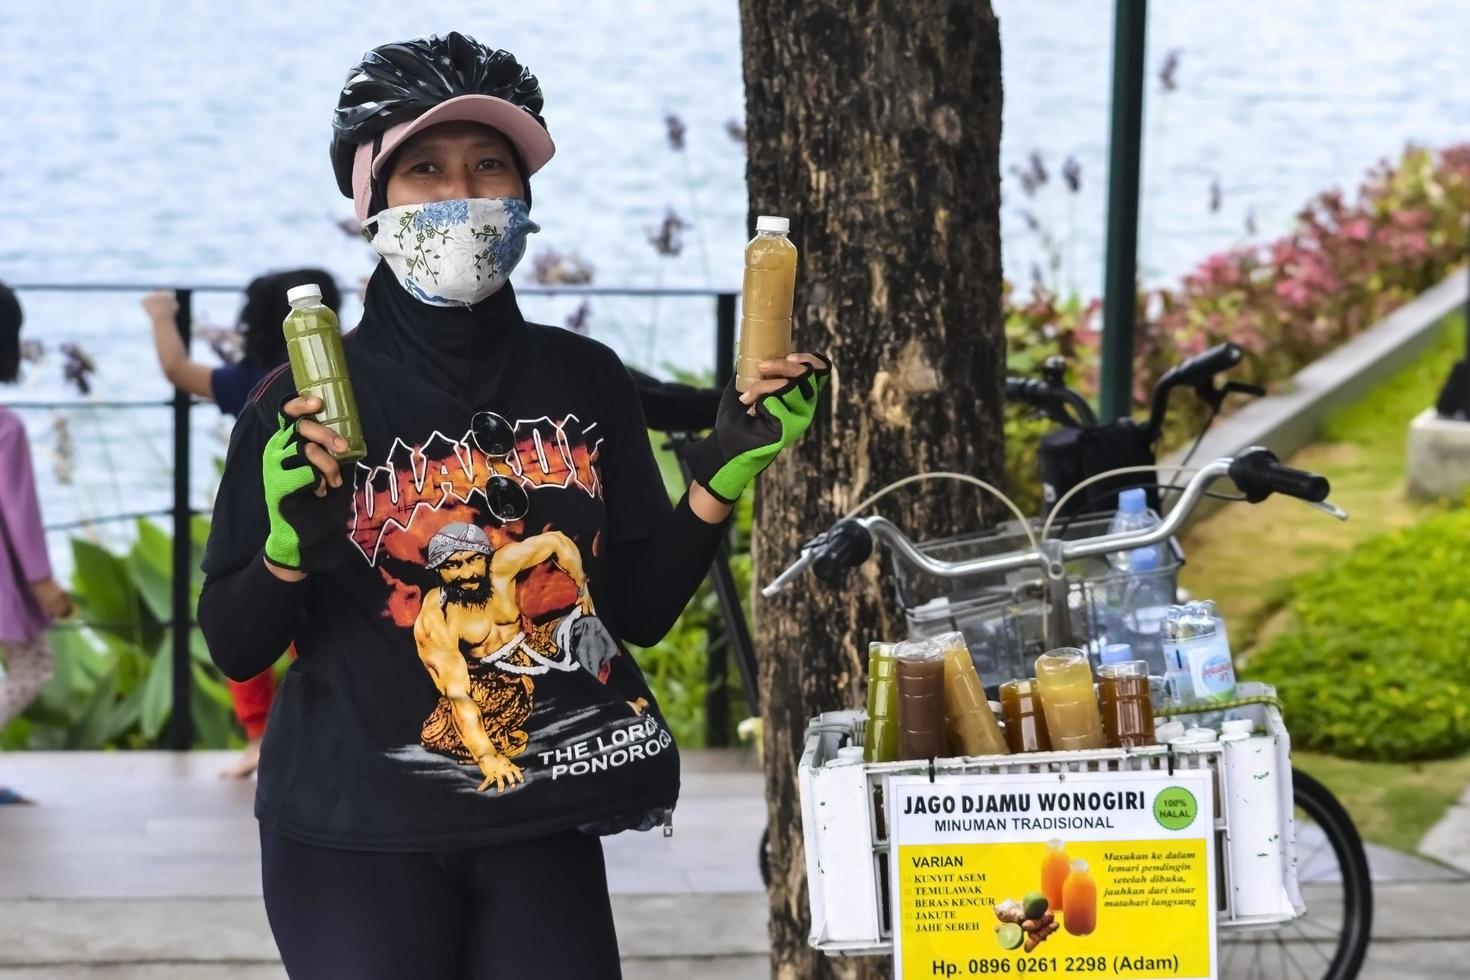 bekasi, west java, indonesië, 5 maart 2022. een vrouw die kruidengeneesmiddelen verkoopt, verkoopt haar kruidengeneesmiddel op een fiets foto